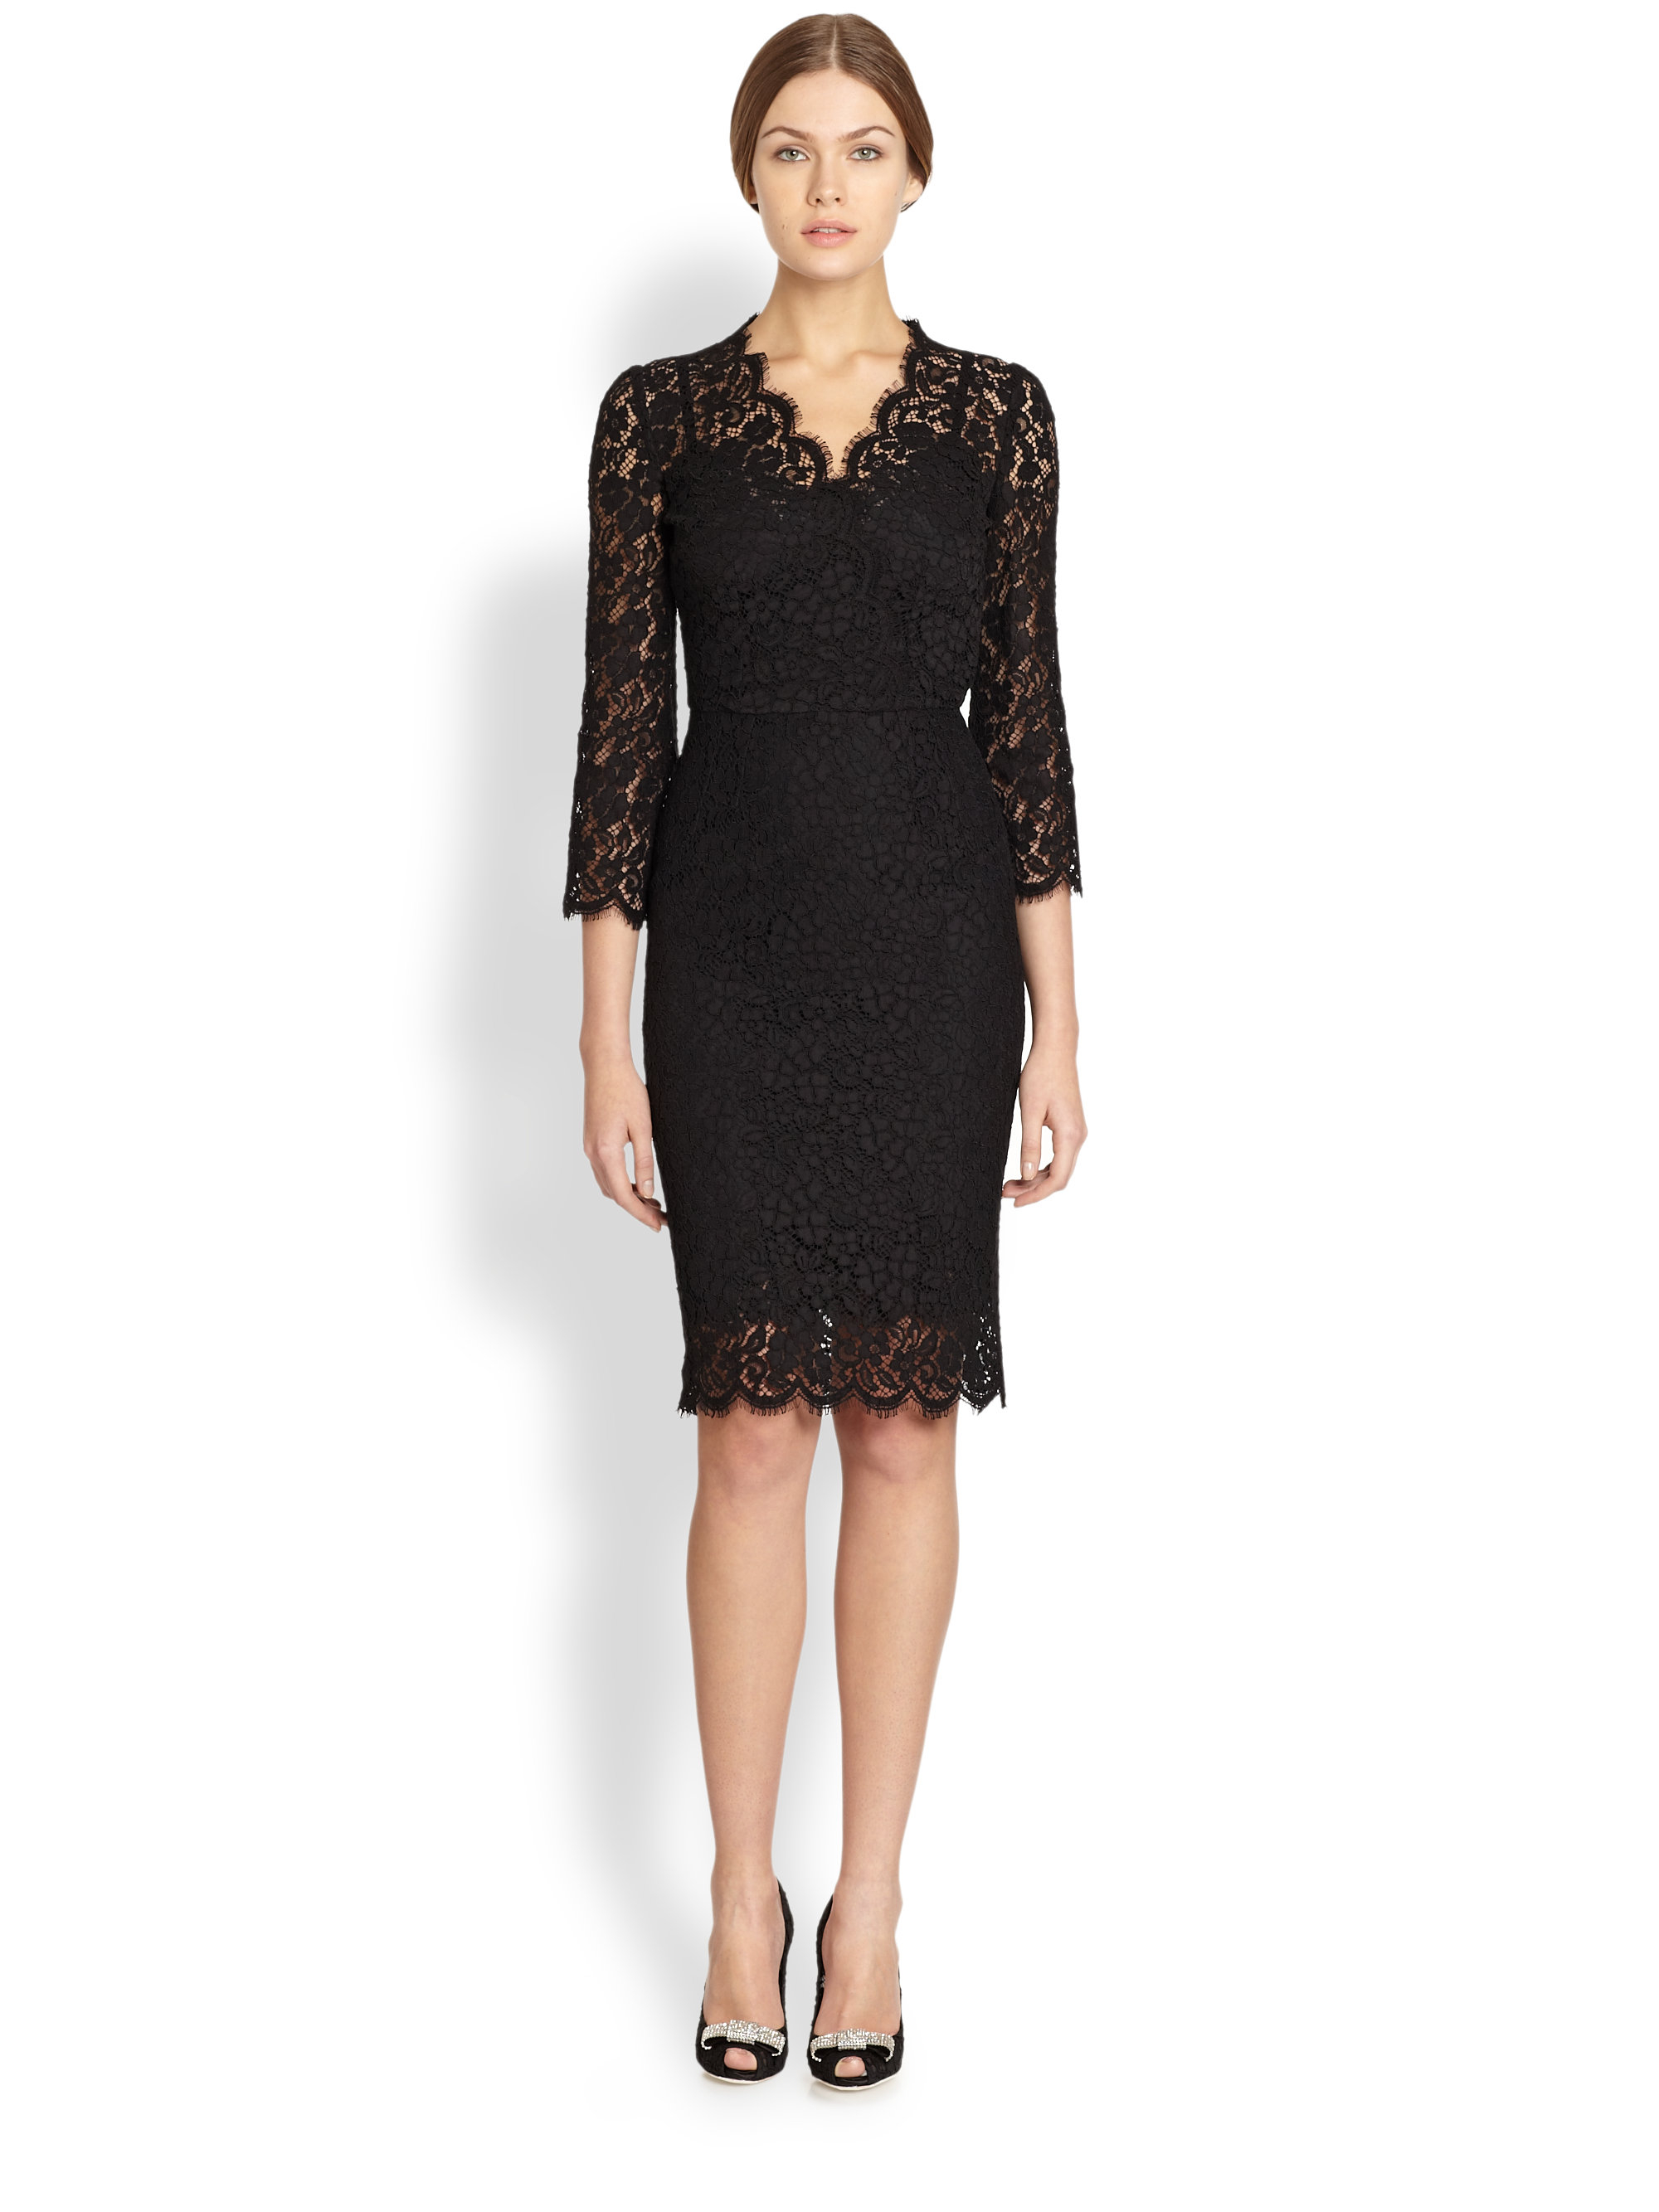 Lyst - Dolce & Gabbana Lace Dress in Black